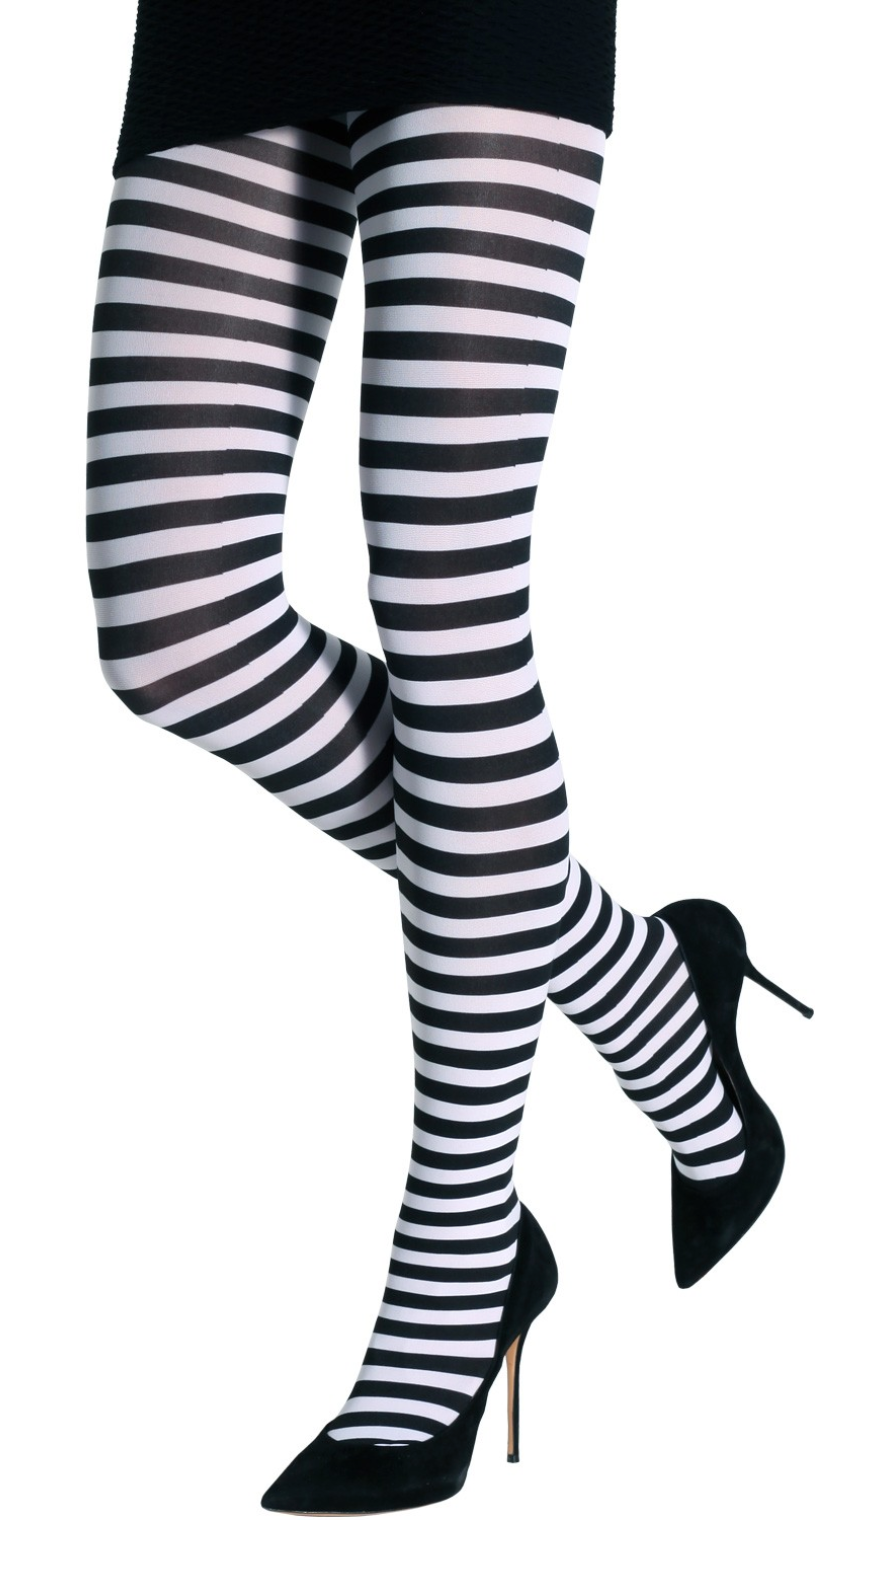 Emilio Cavallini Two Toned Horizontal Stripes Tights - black and white striped tights